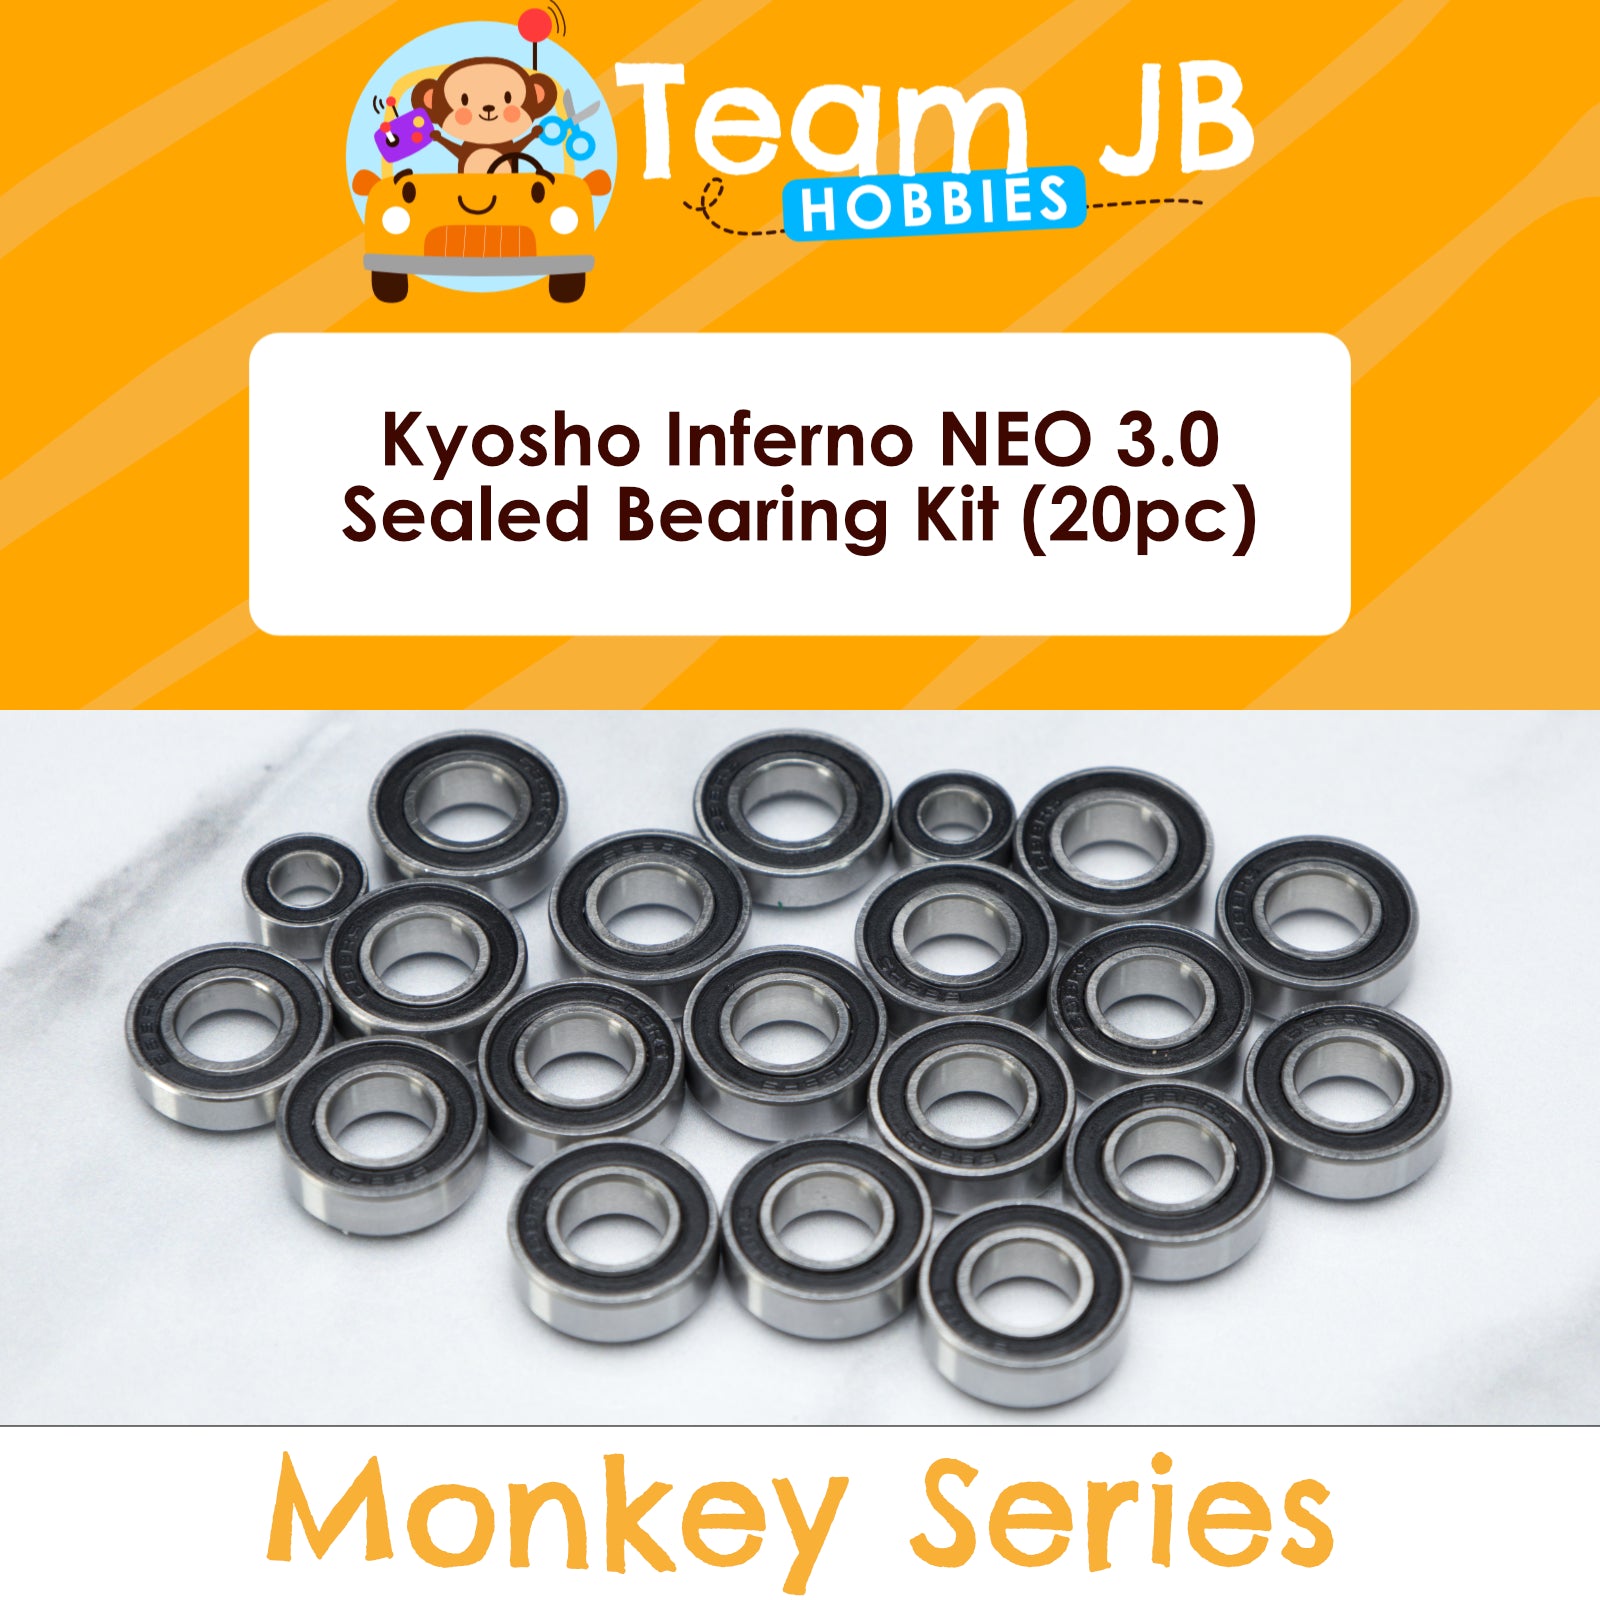 Kyosho Inferno NEO 3.0 - Sealed Bearing Kit